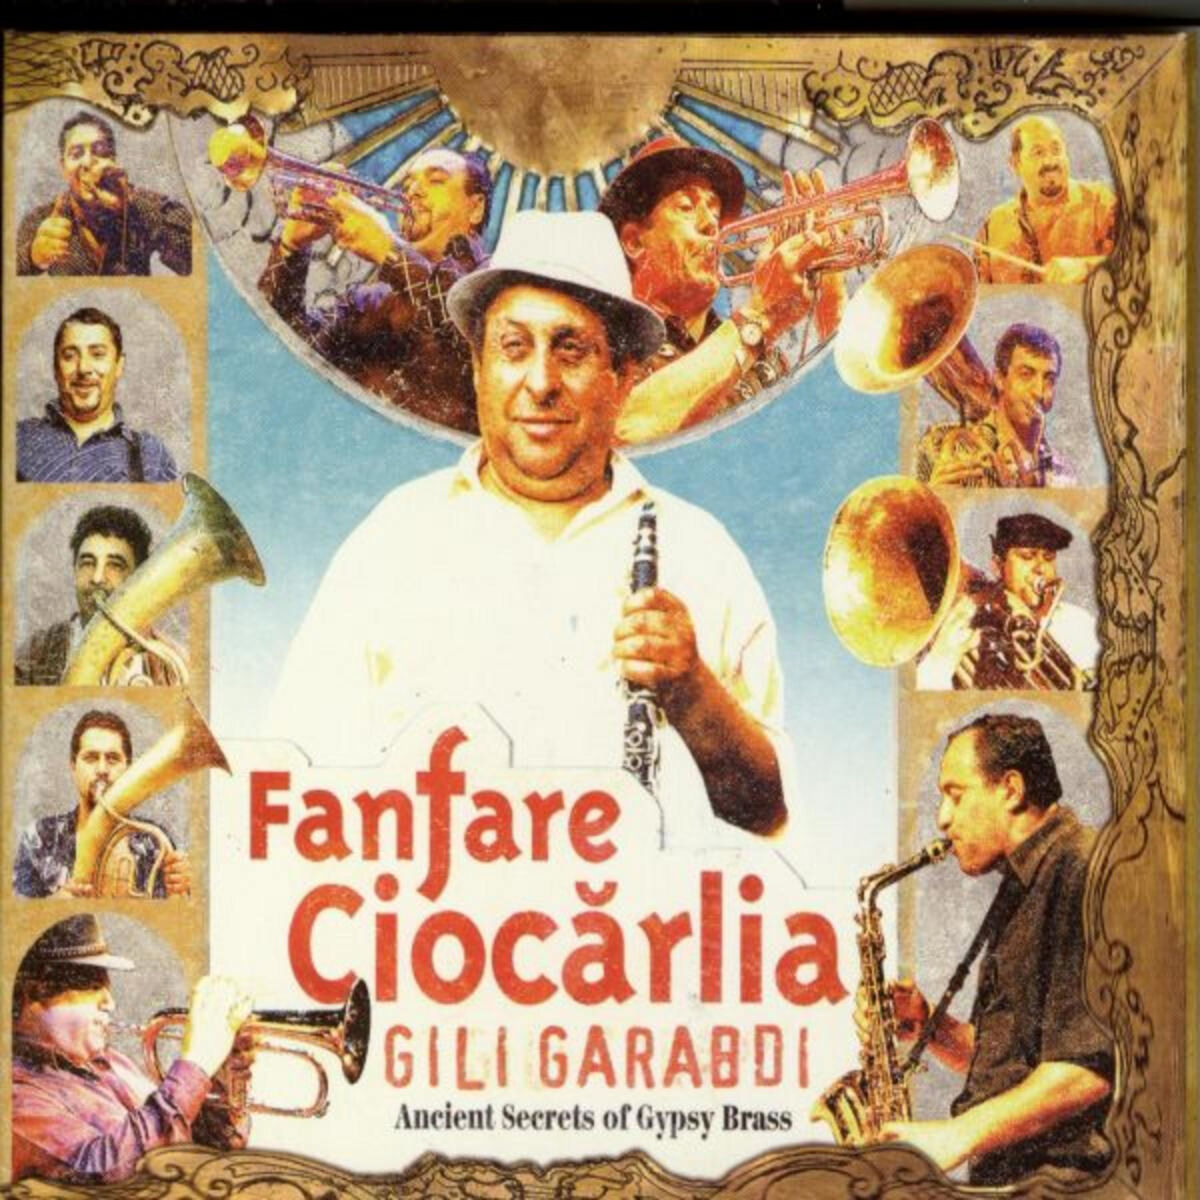 Fanfare Ciocarlia: albums, songs, playlists | Listen on Deezer